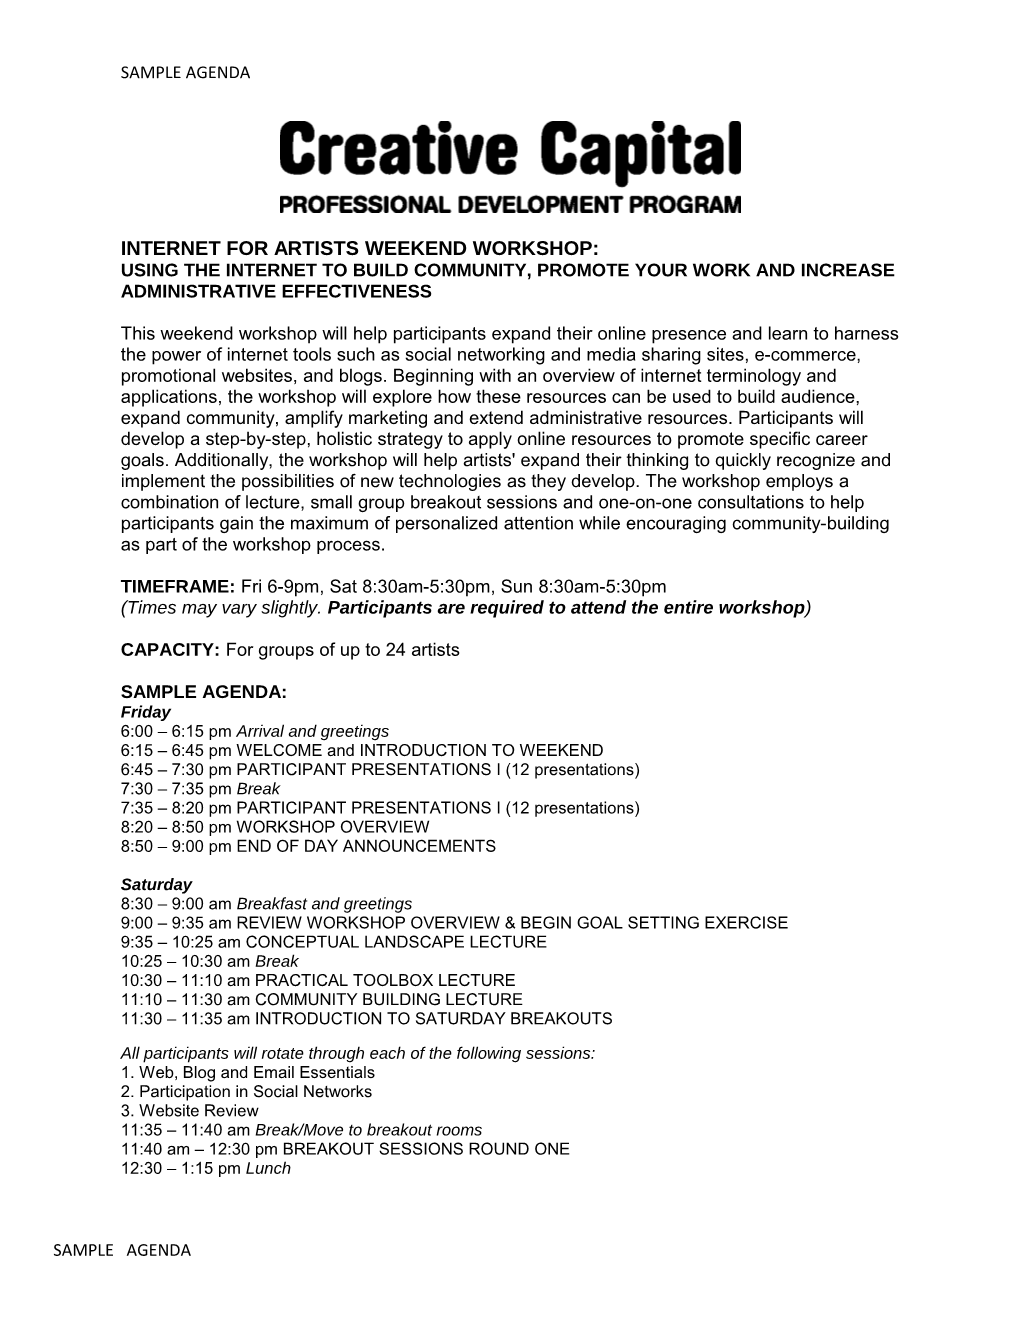 Creative Capital Sample Agenda